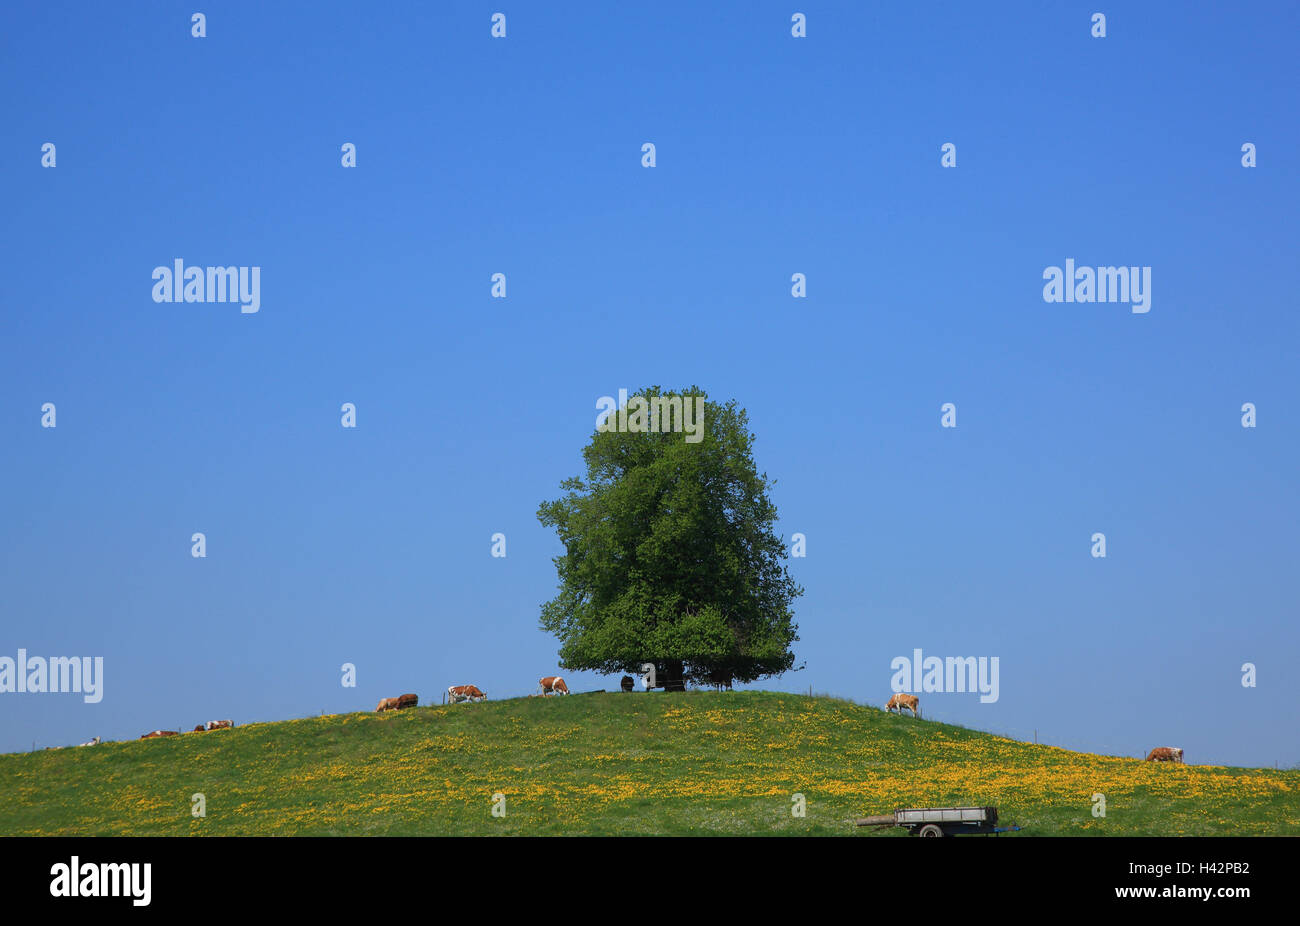 Switzerland, canton Zurich, meadow, tree, cows, Stock Photo